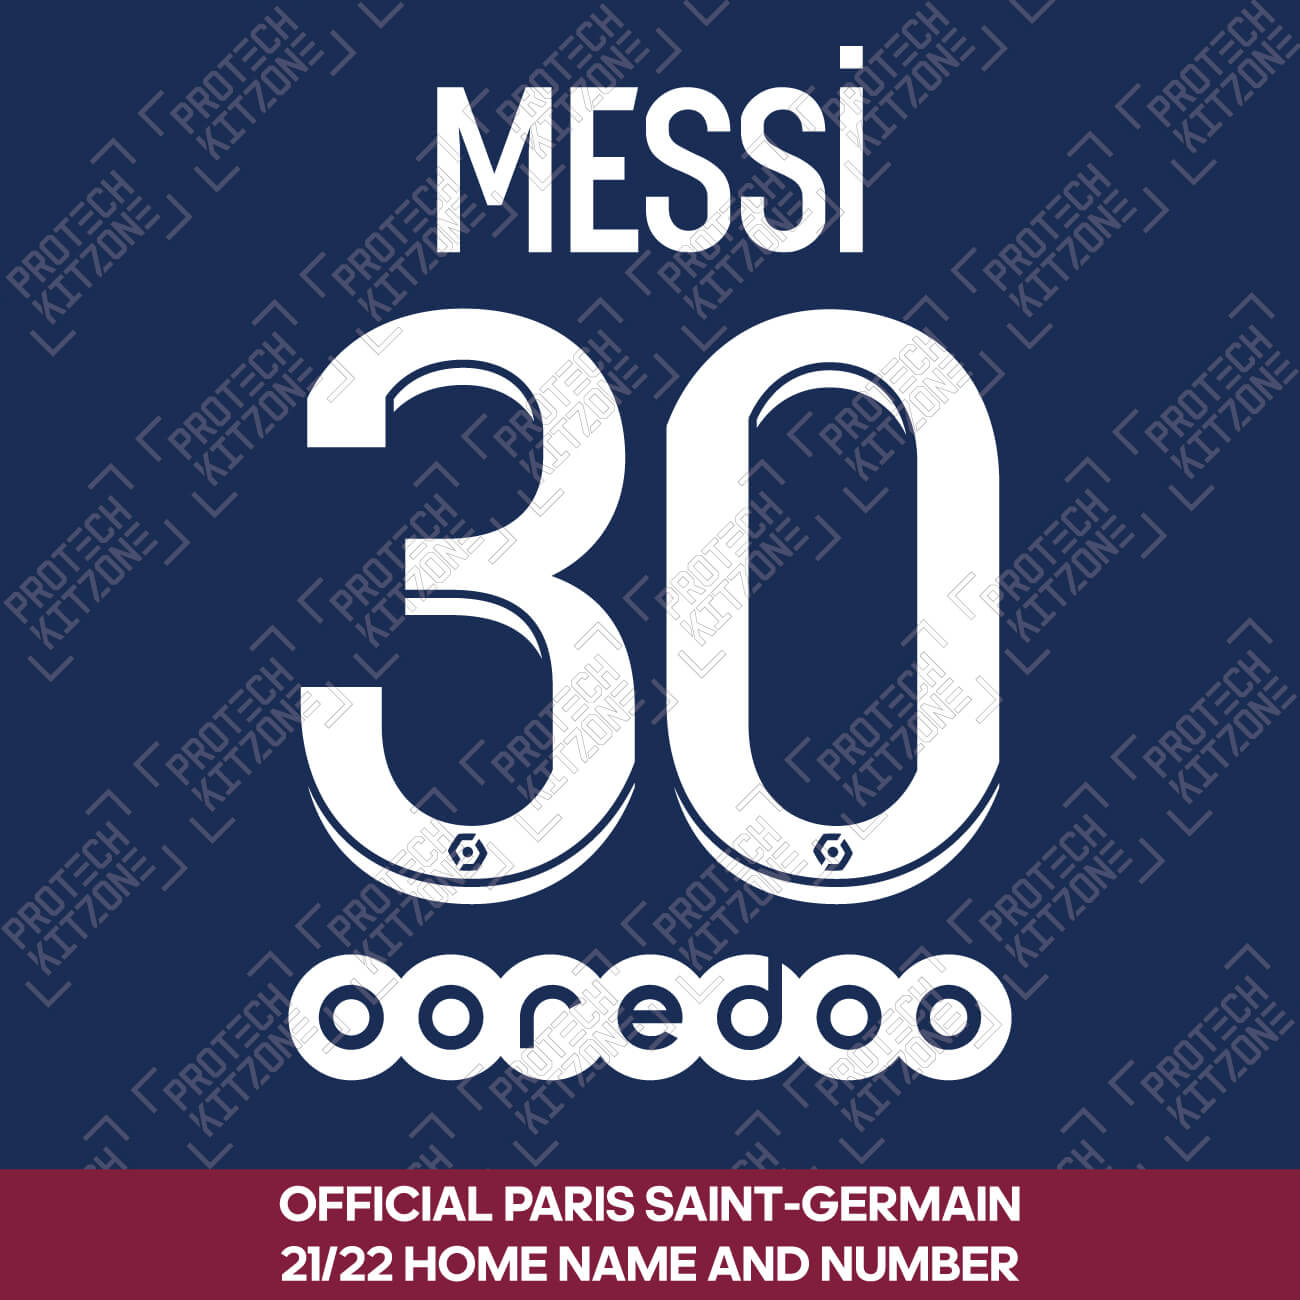 Dorsal PSG 2021-22 Name Set & Number #30 MESSI Flocage Paris Sain Germain 